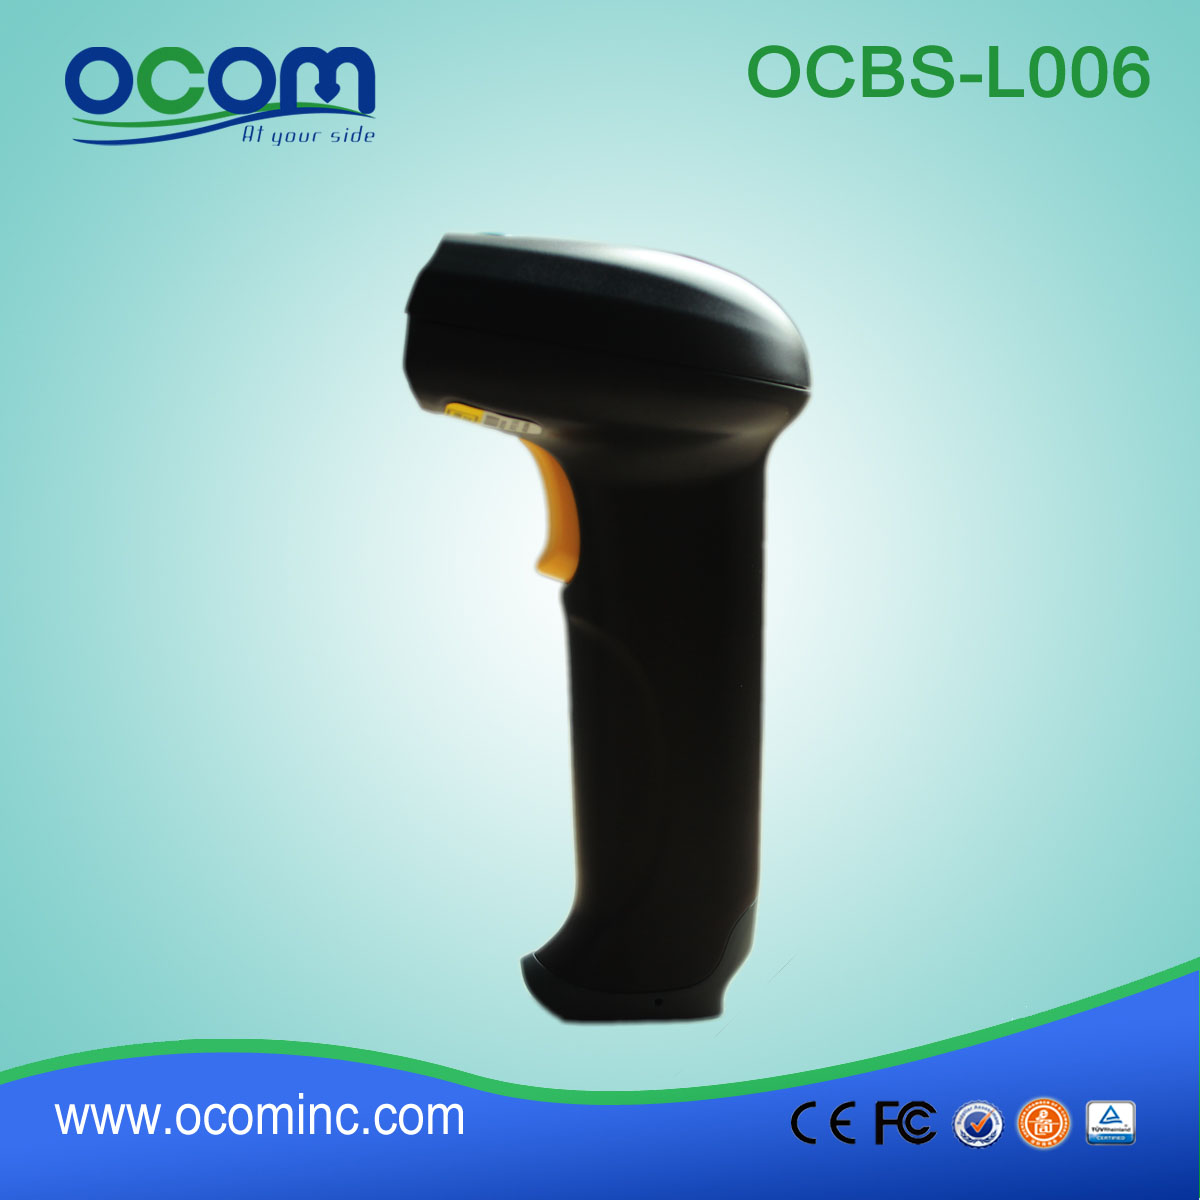 OCBS-L006 USB Laser Handheld Barcode Scanner